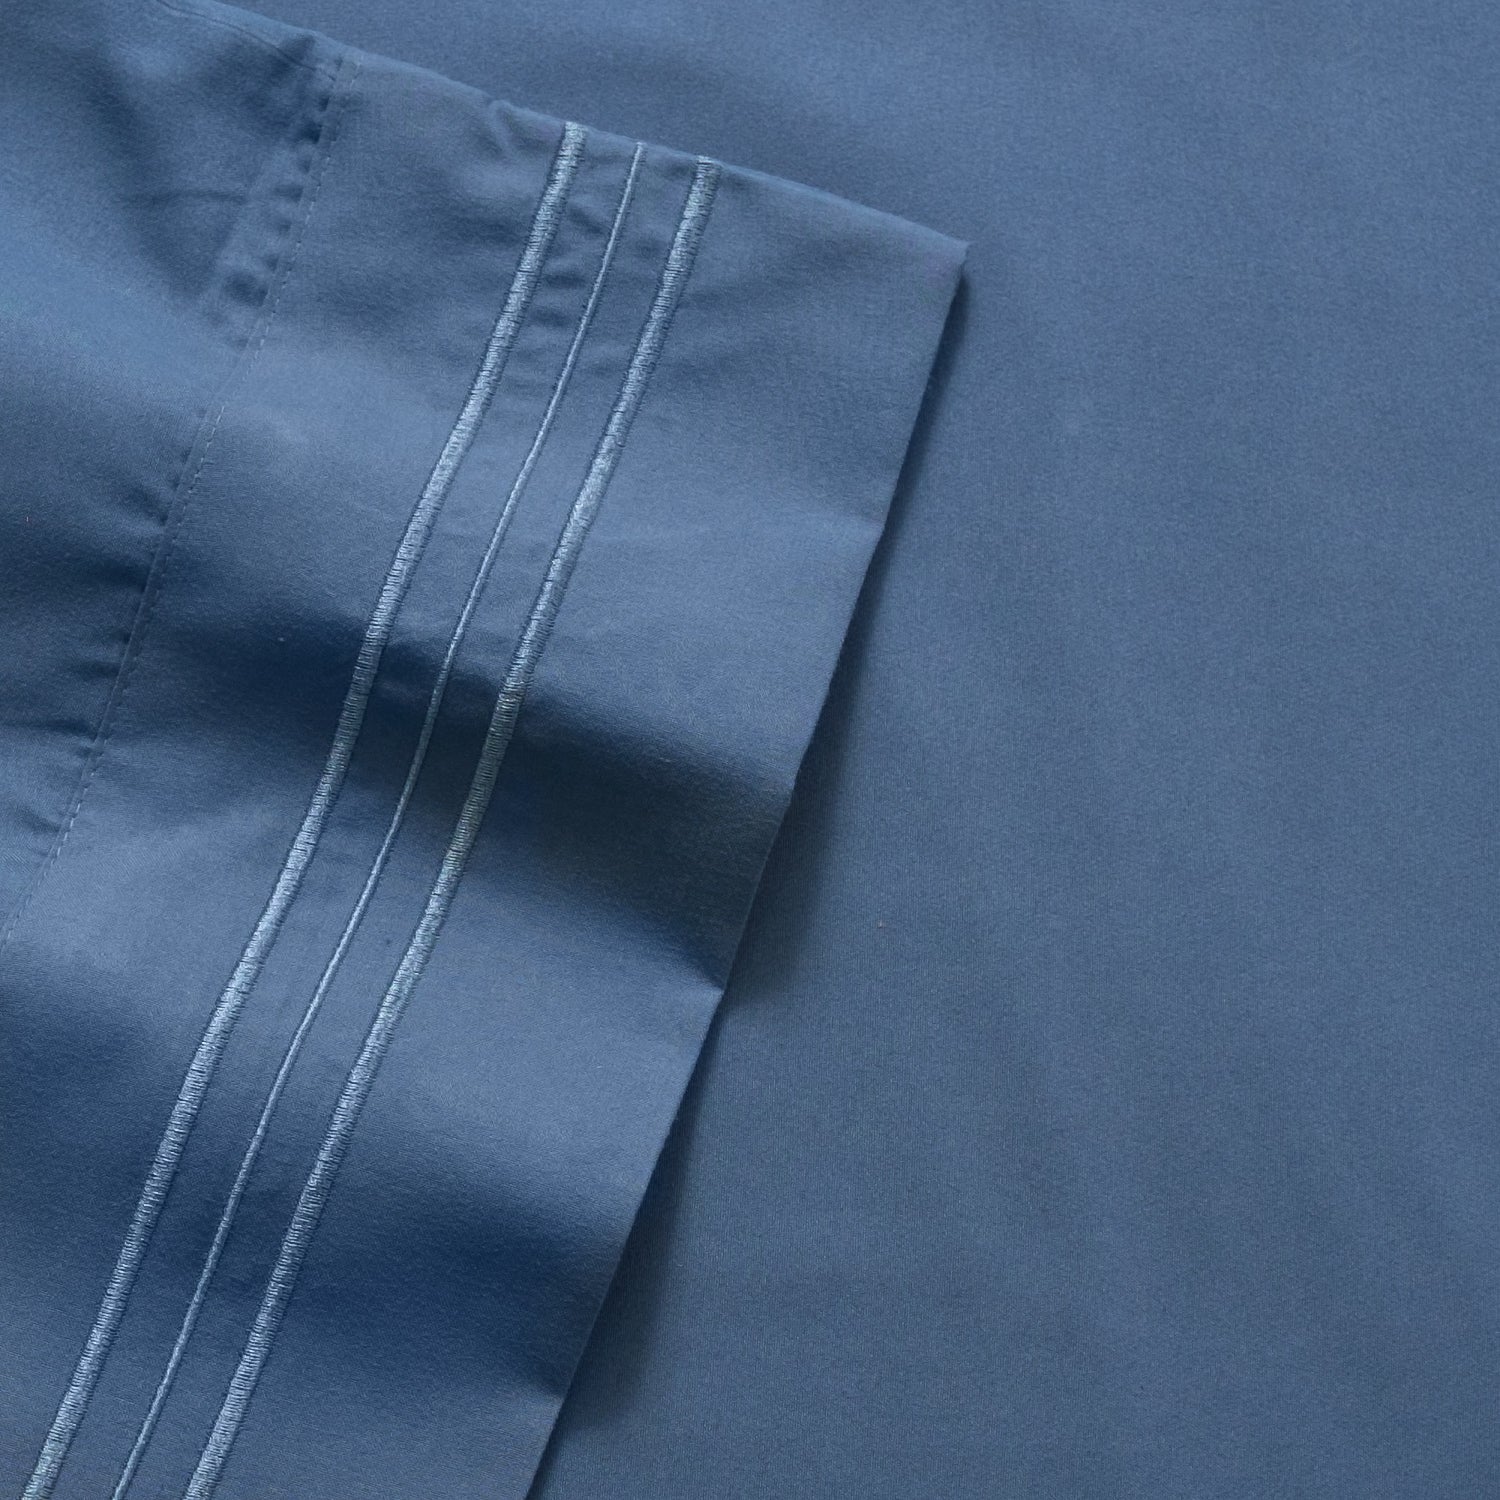 Basic 5-Piece Bed in a Bag  Set Denim - Fabric